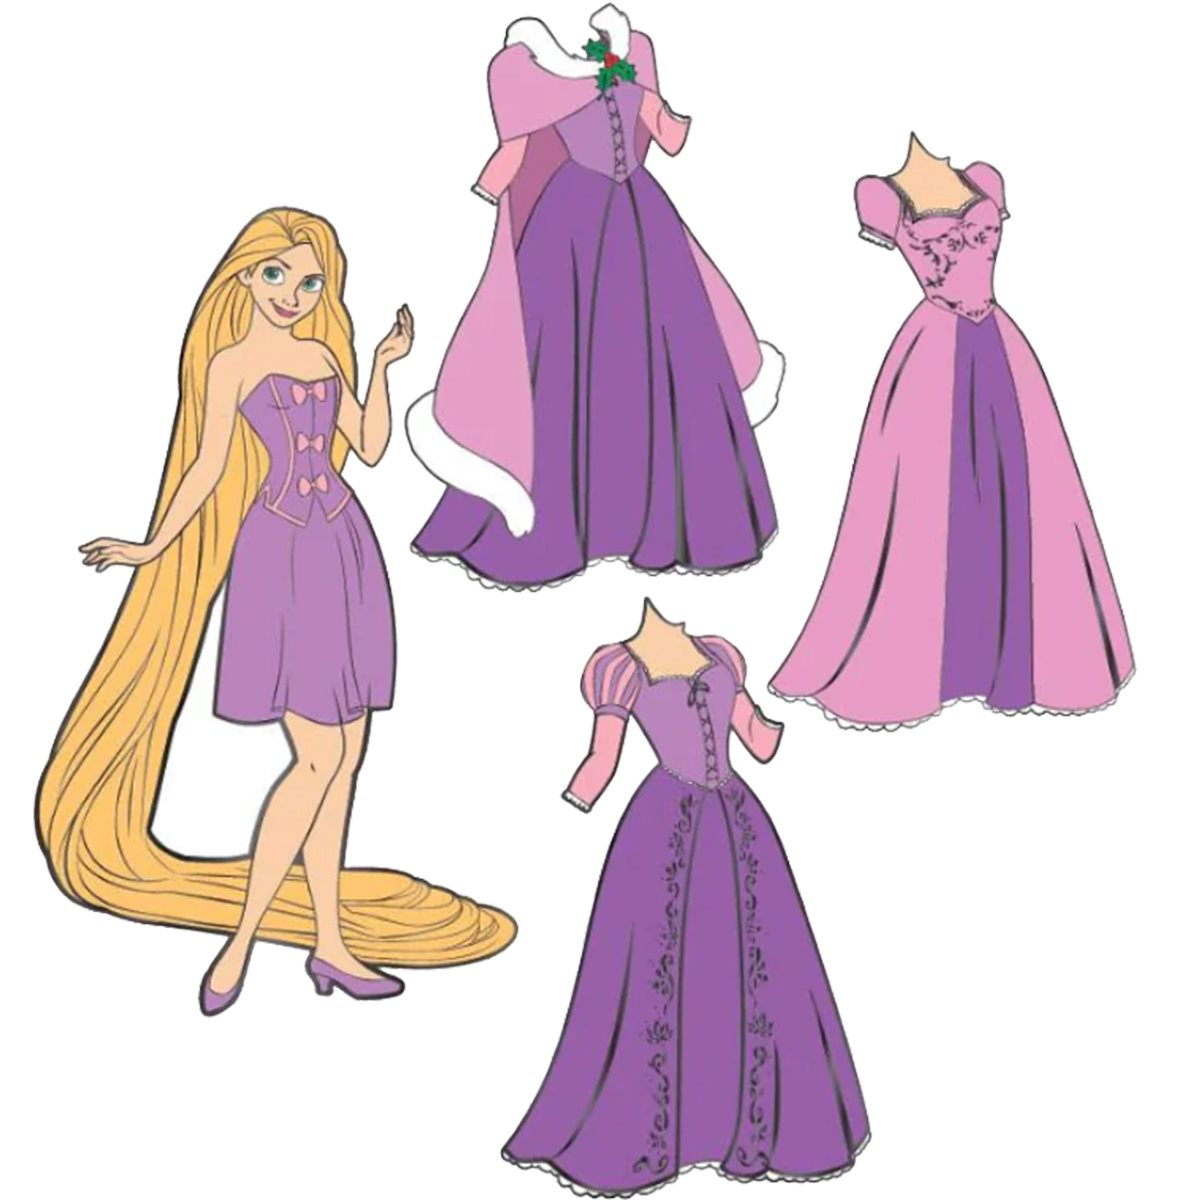 Loungefly Disney Mini Backpack, Tangled Rapunzel Disney Villains Mother  Gothel